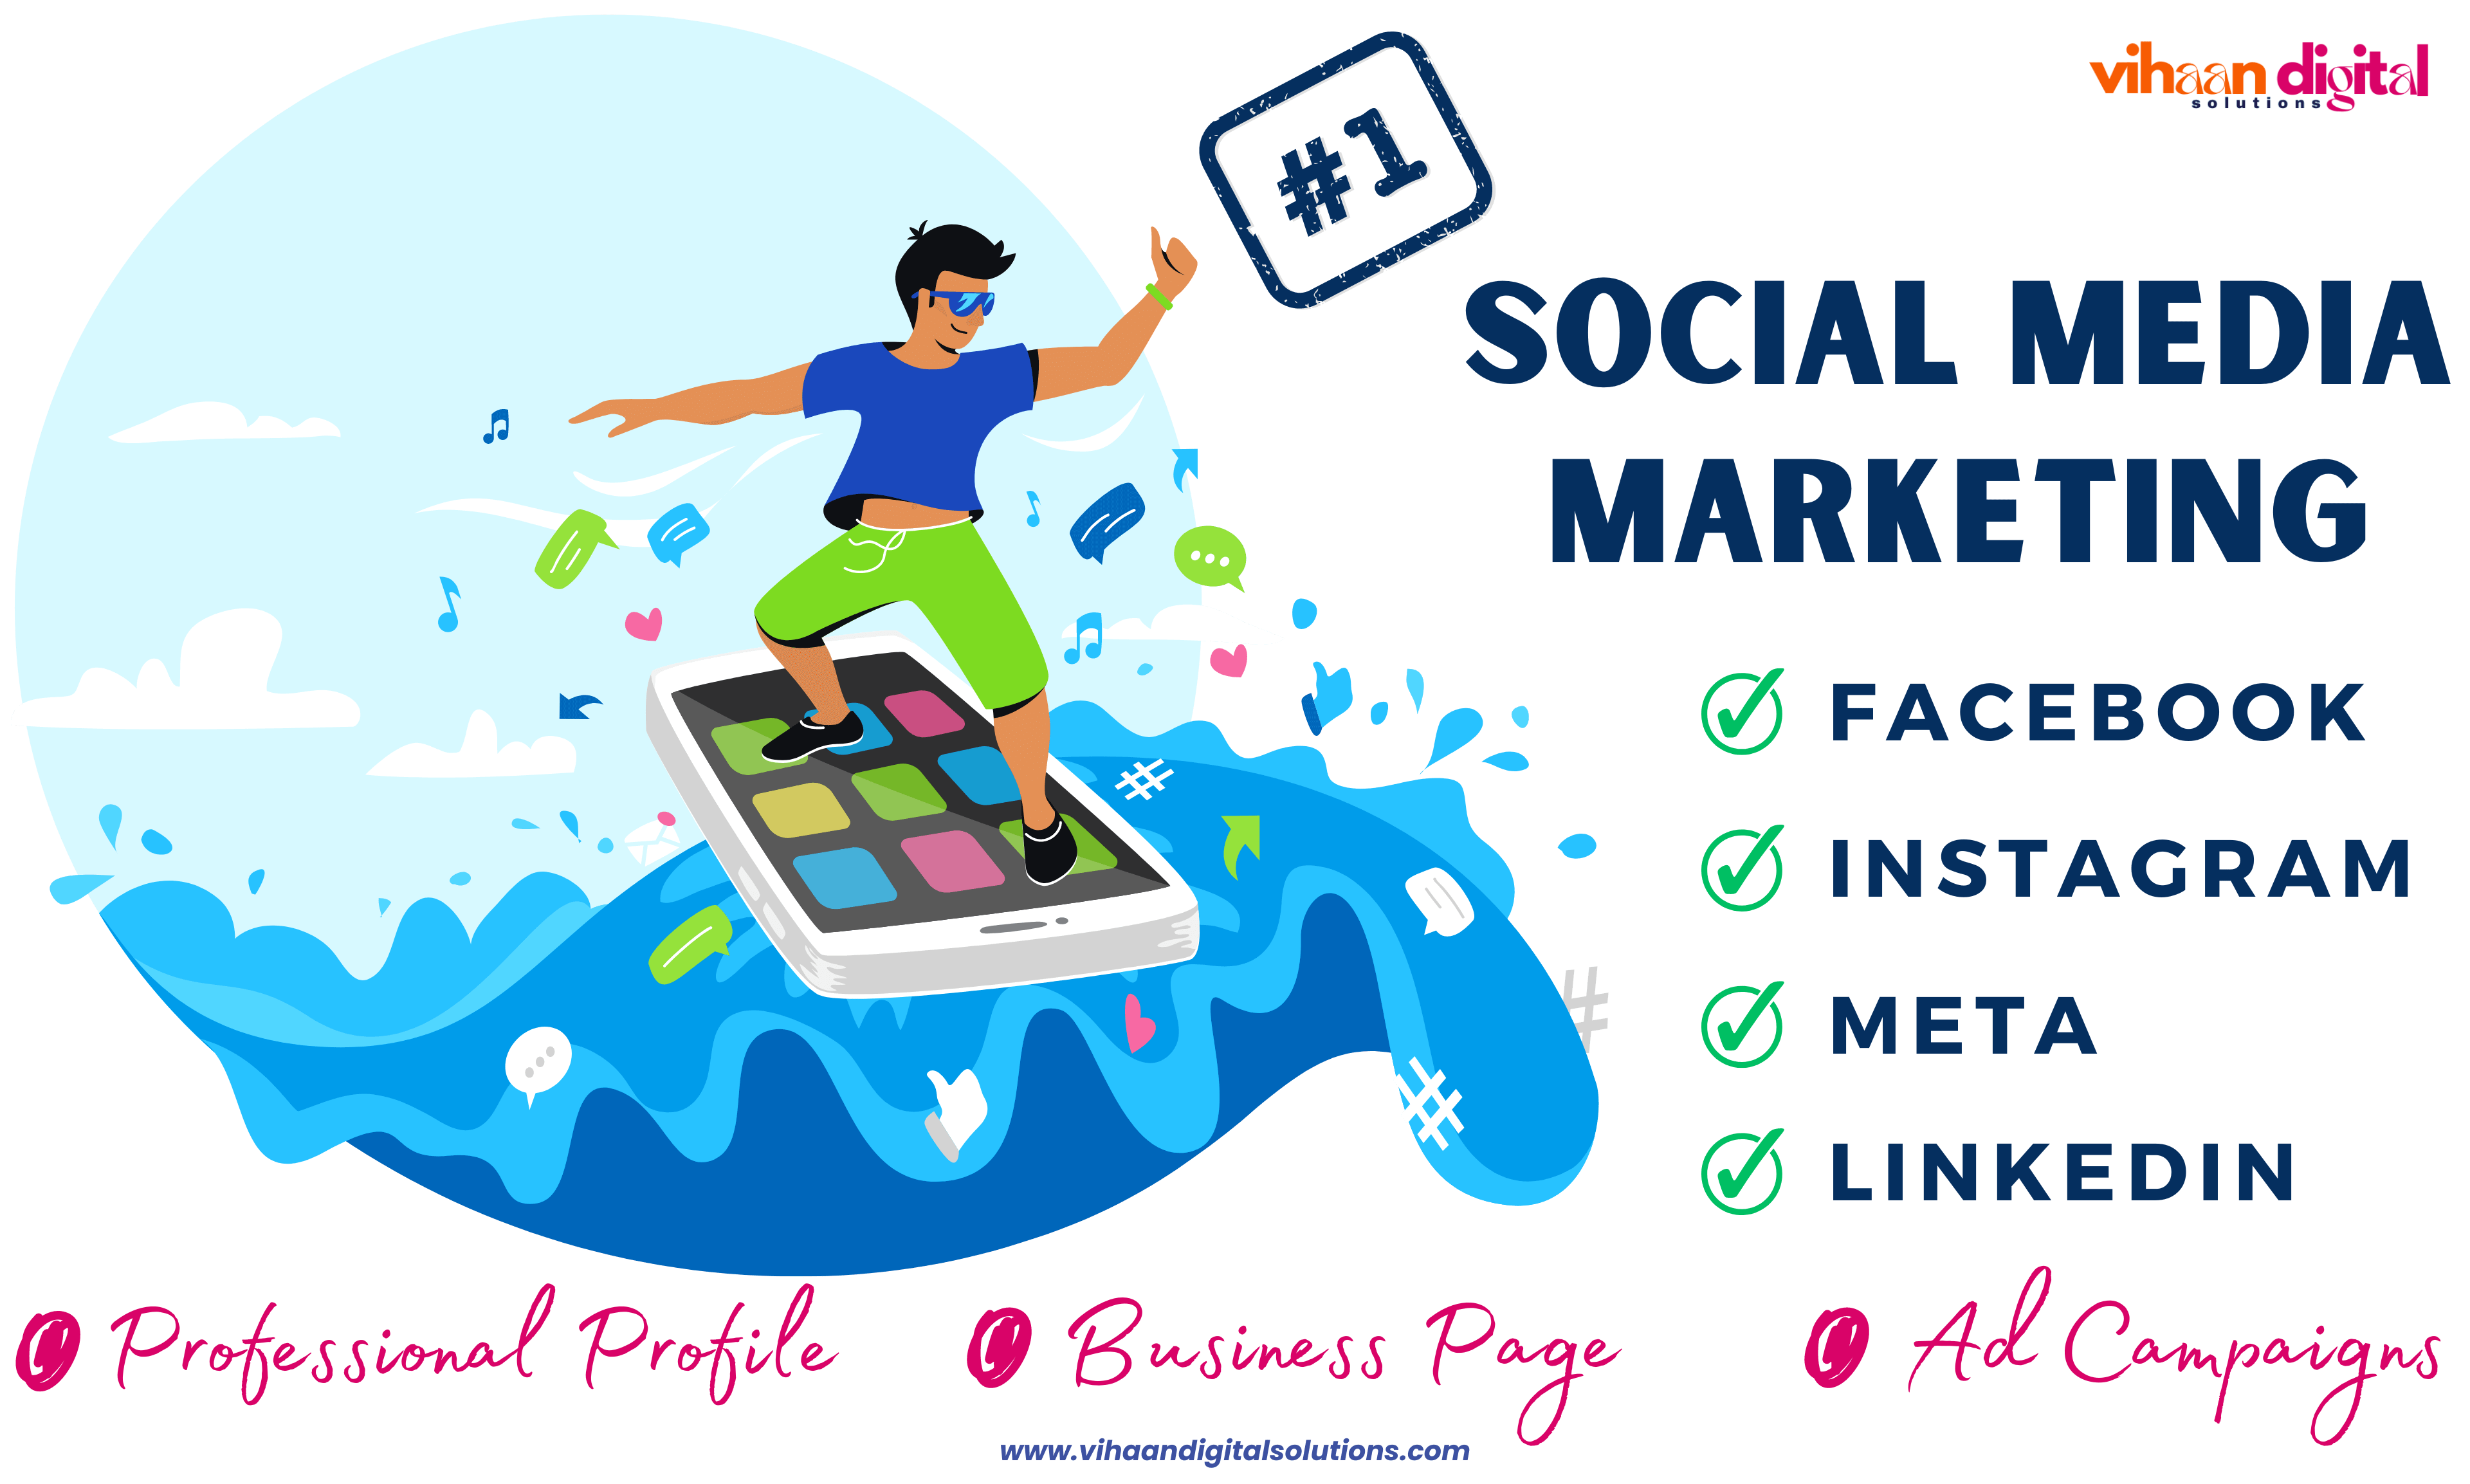 Branding and Promotions in Social Media Platforms like Facebook, Instagram, and LinkedIn